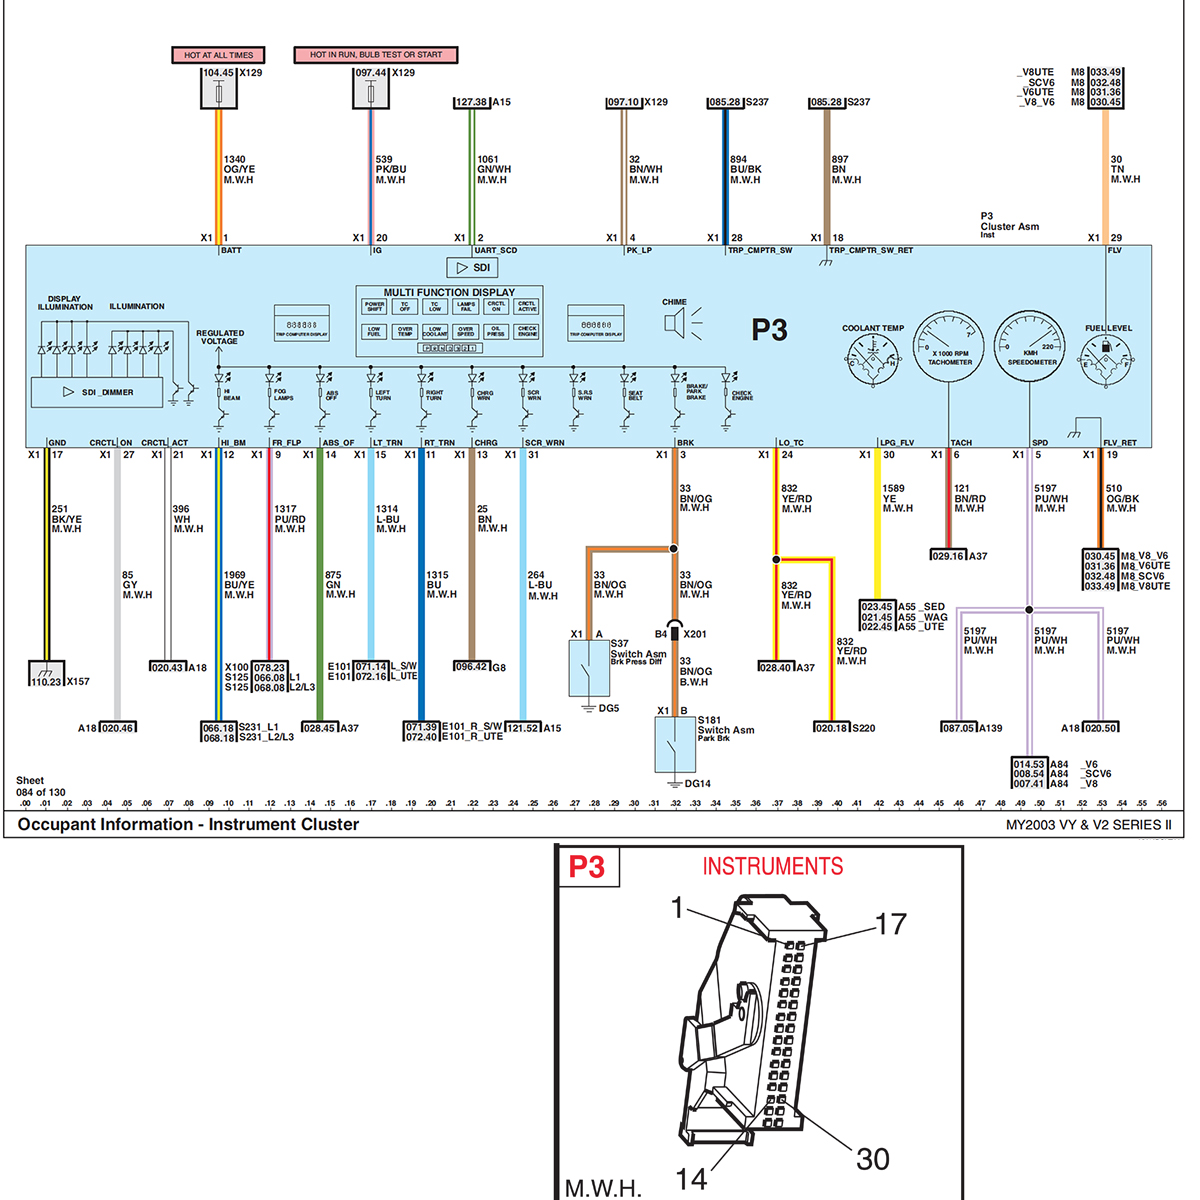 [DIAGRAM] Cj 7 Wiring Diagram Instrument Cluster - MYDIAGRAM.ONLINE